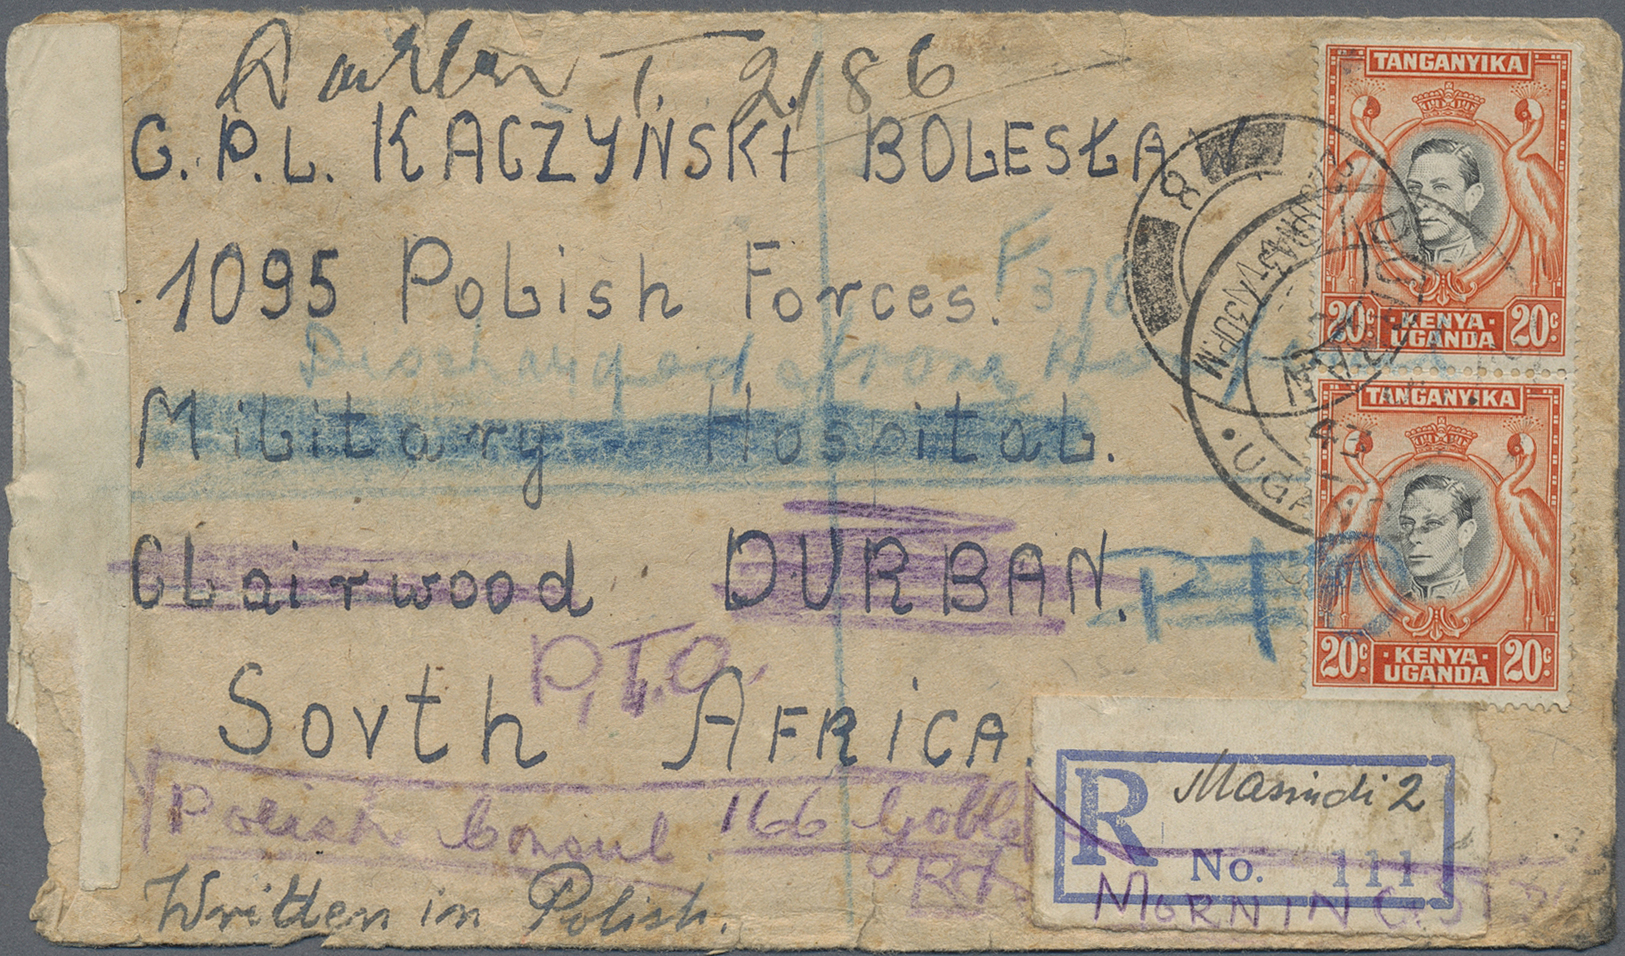 Br Britisch-Ostafrika Und Uganda: 1943. Registered Envelope Written From Masindi Polish Refugee Camp Addressed To The 'P - East Africa & Uganda Protectorates